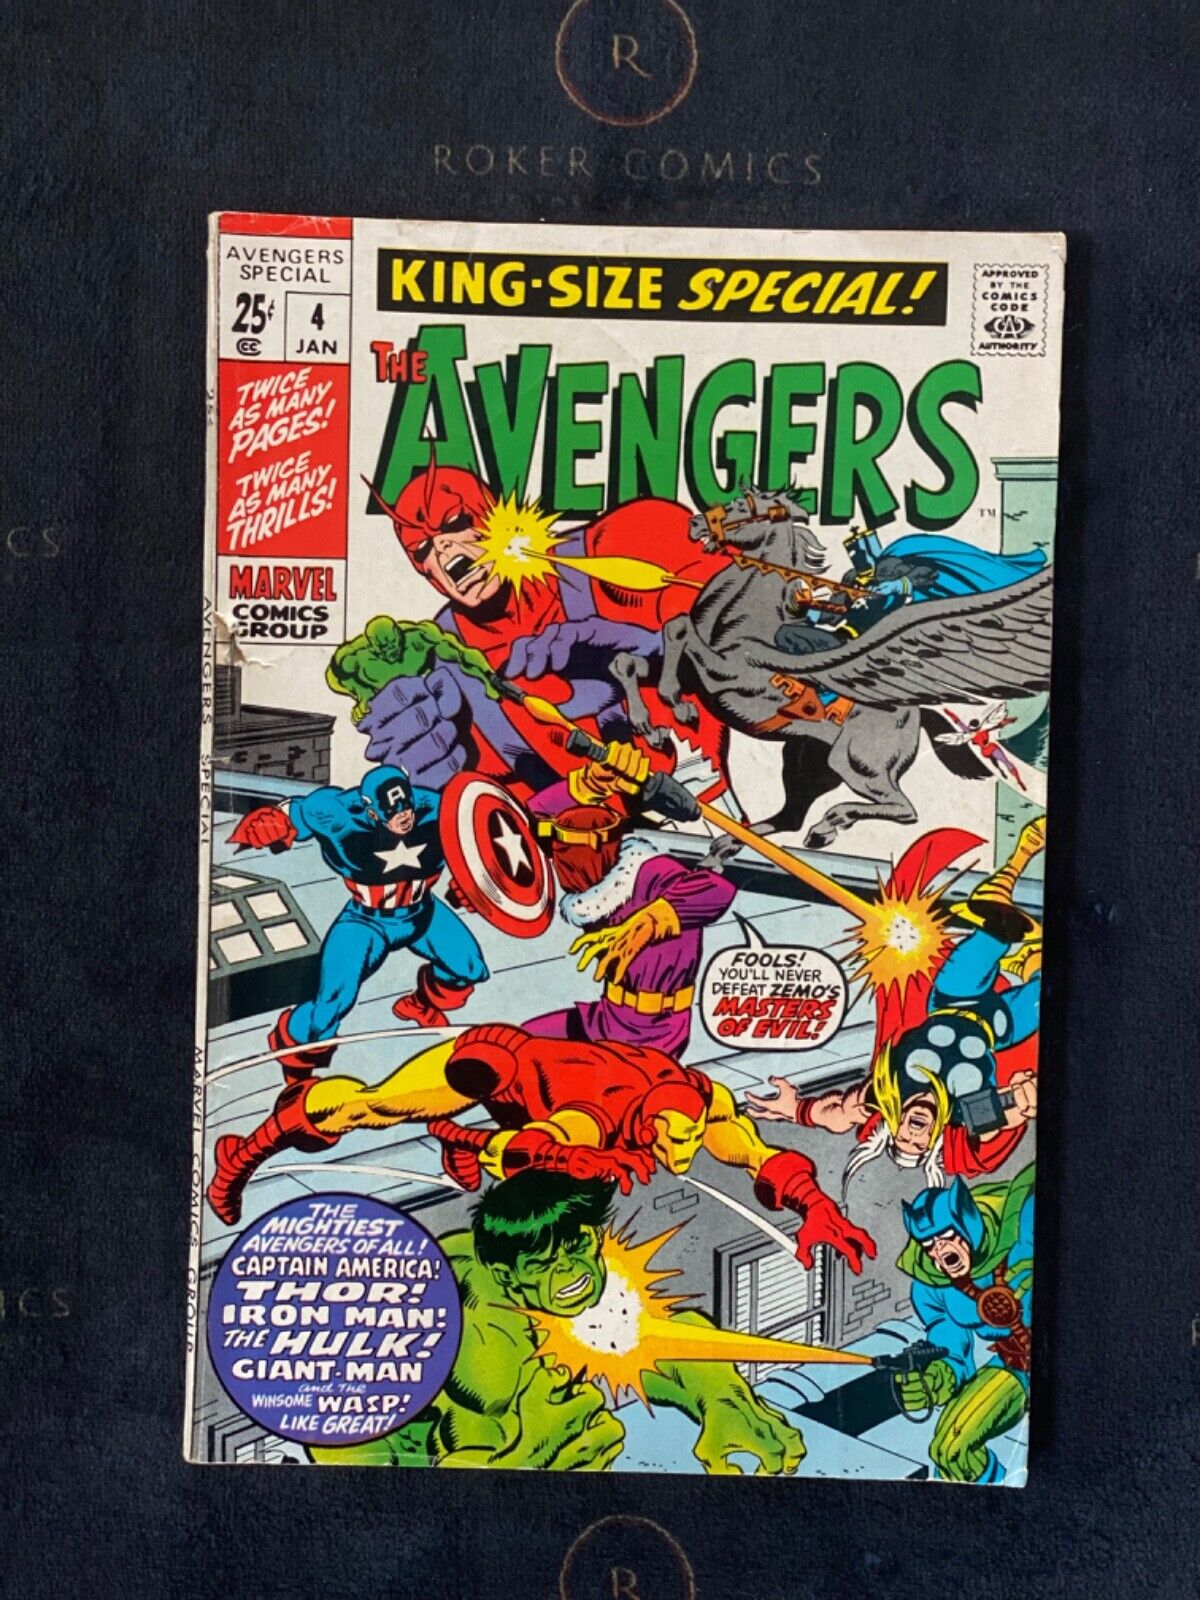 Rare 1971 Avengers Annual #4